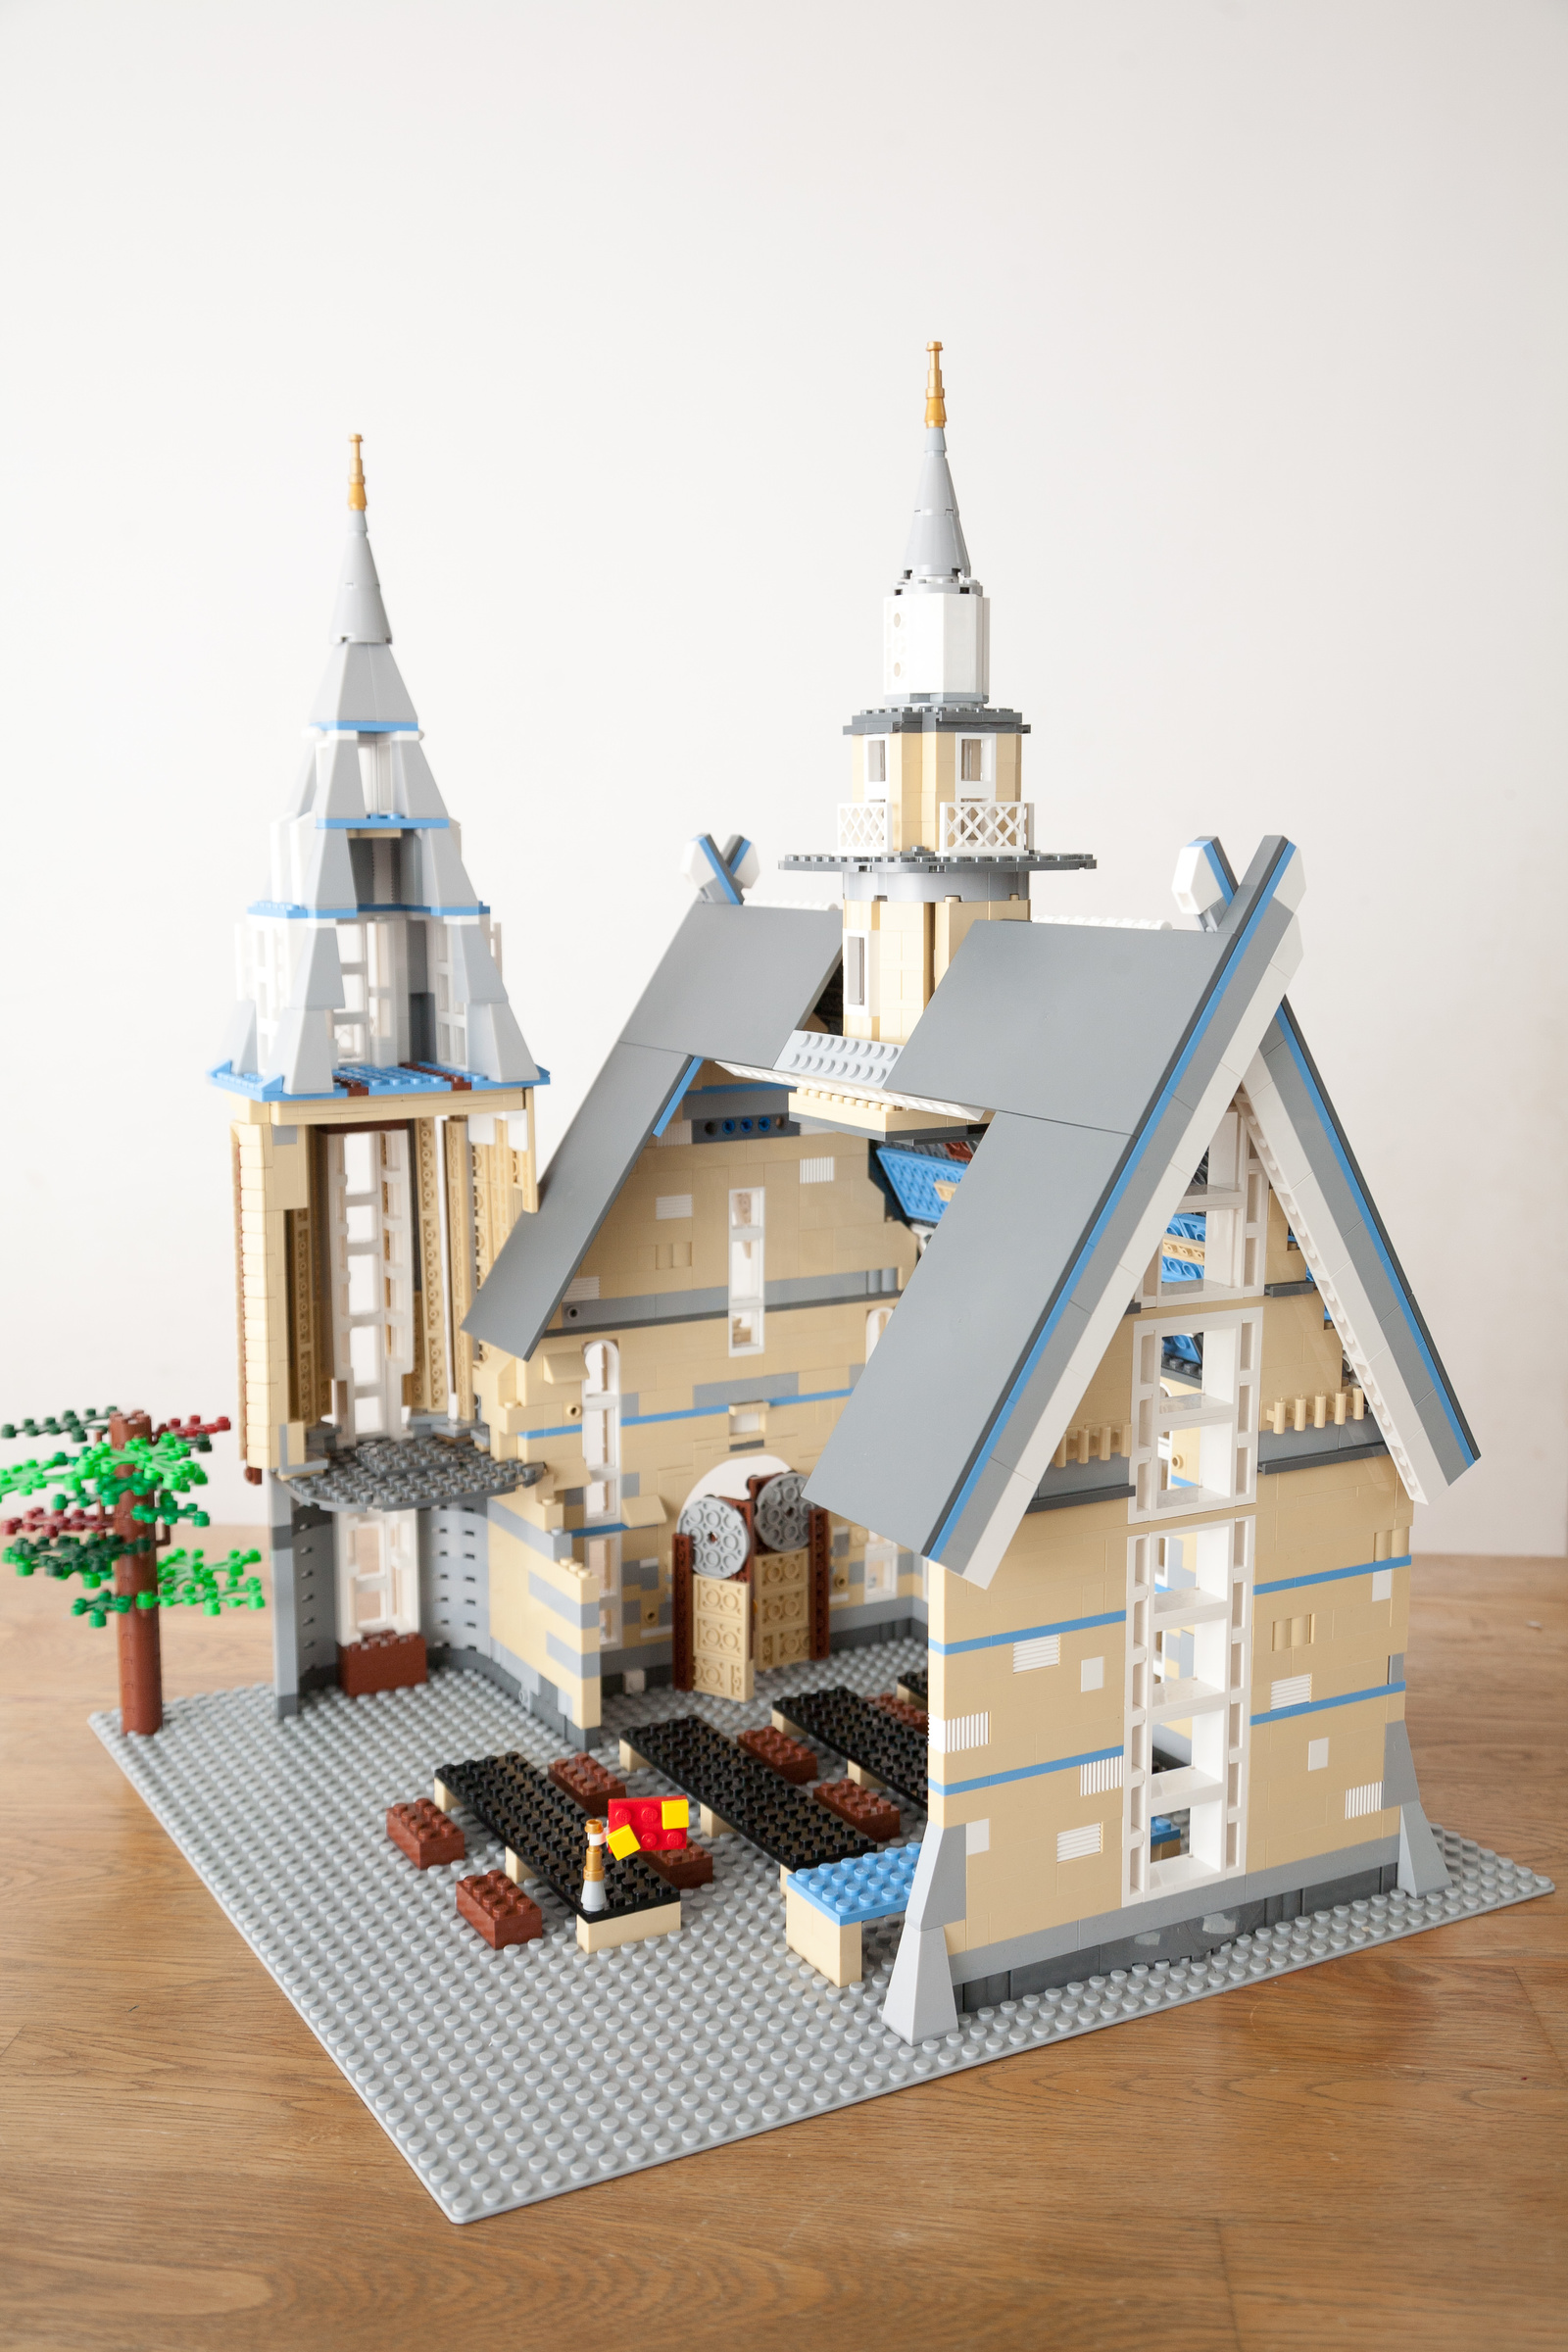 Children's fantasy - Lego, Tower Bridge, Hogwarts, Harry Potter, Reddit, Longpost, The photo